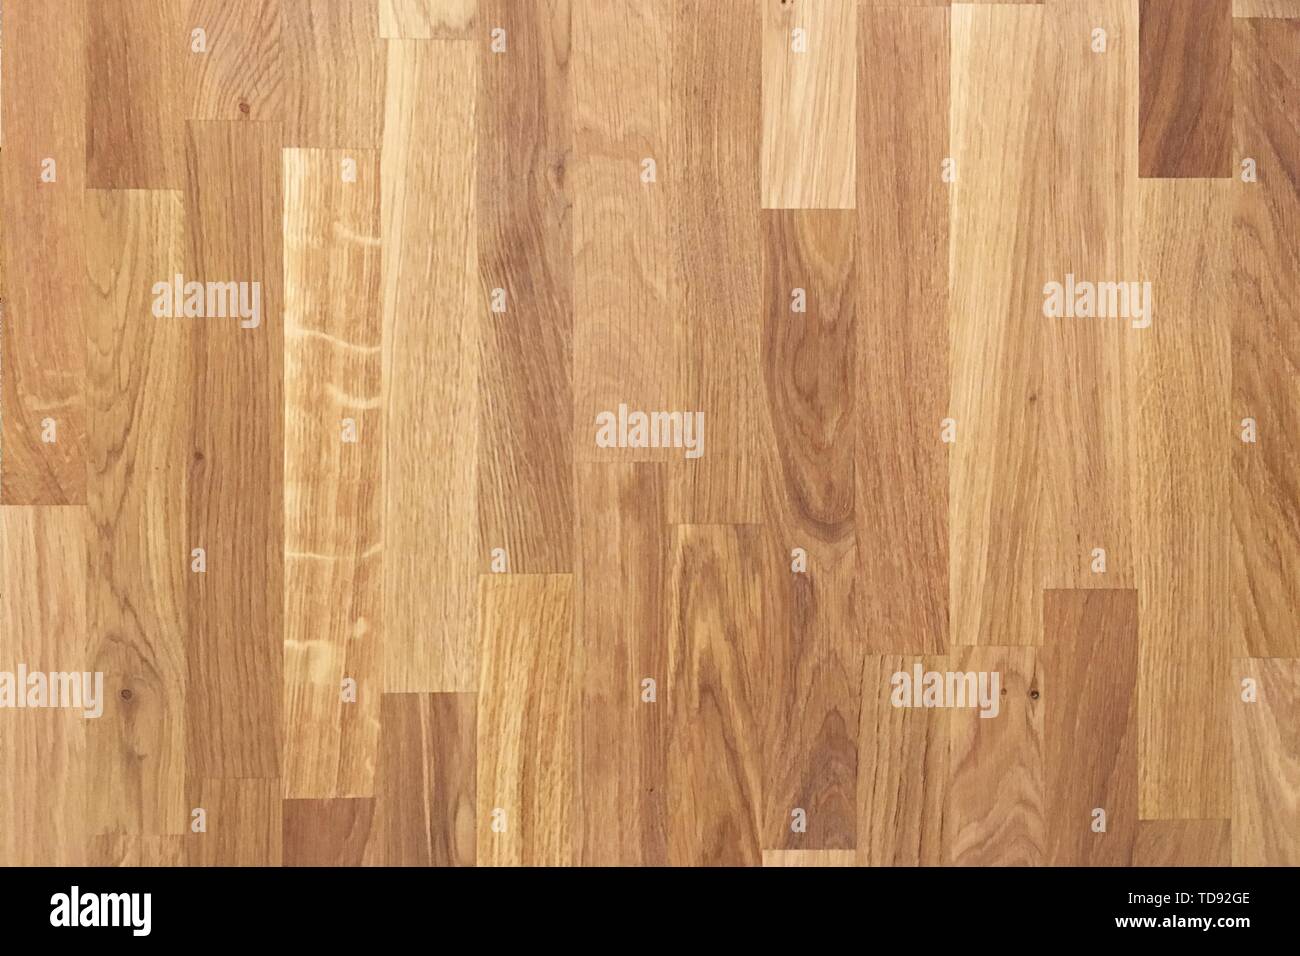 Wood Parquet Texture Wooden Floor Background Stock Photo